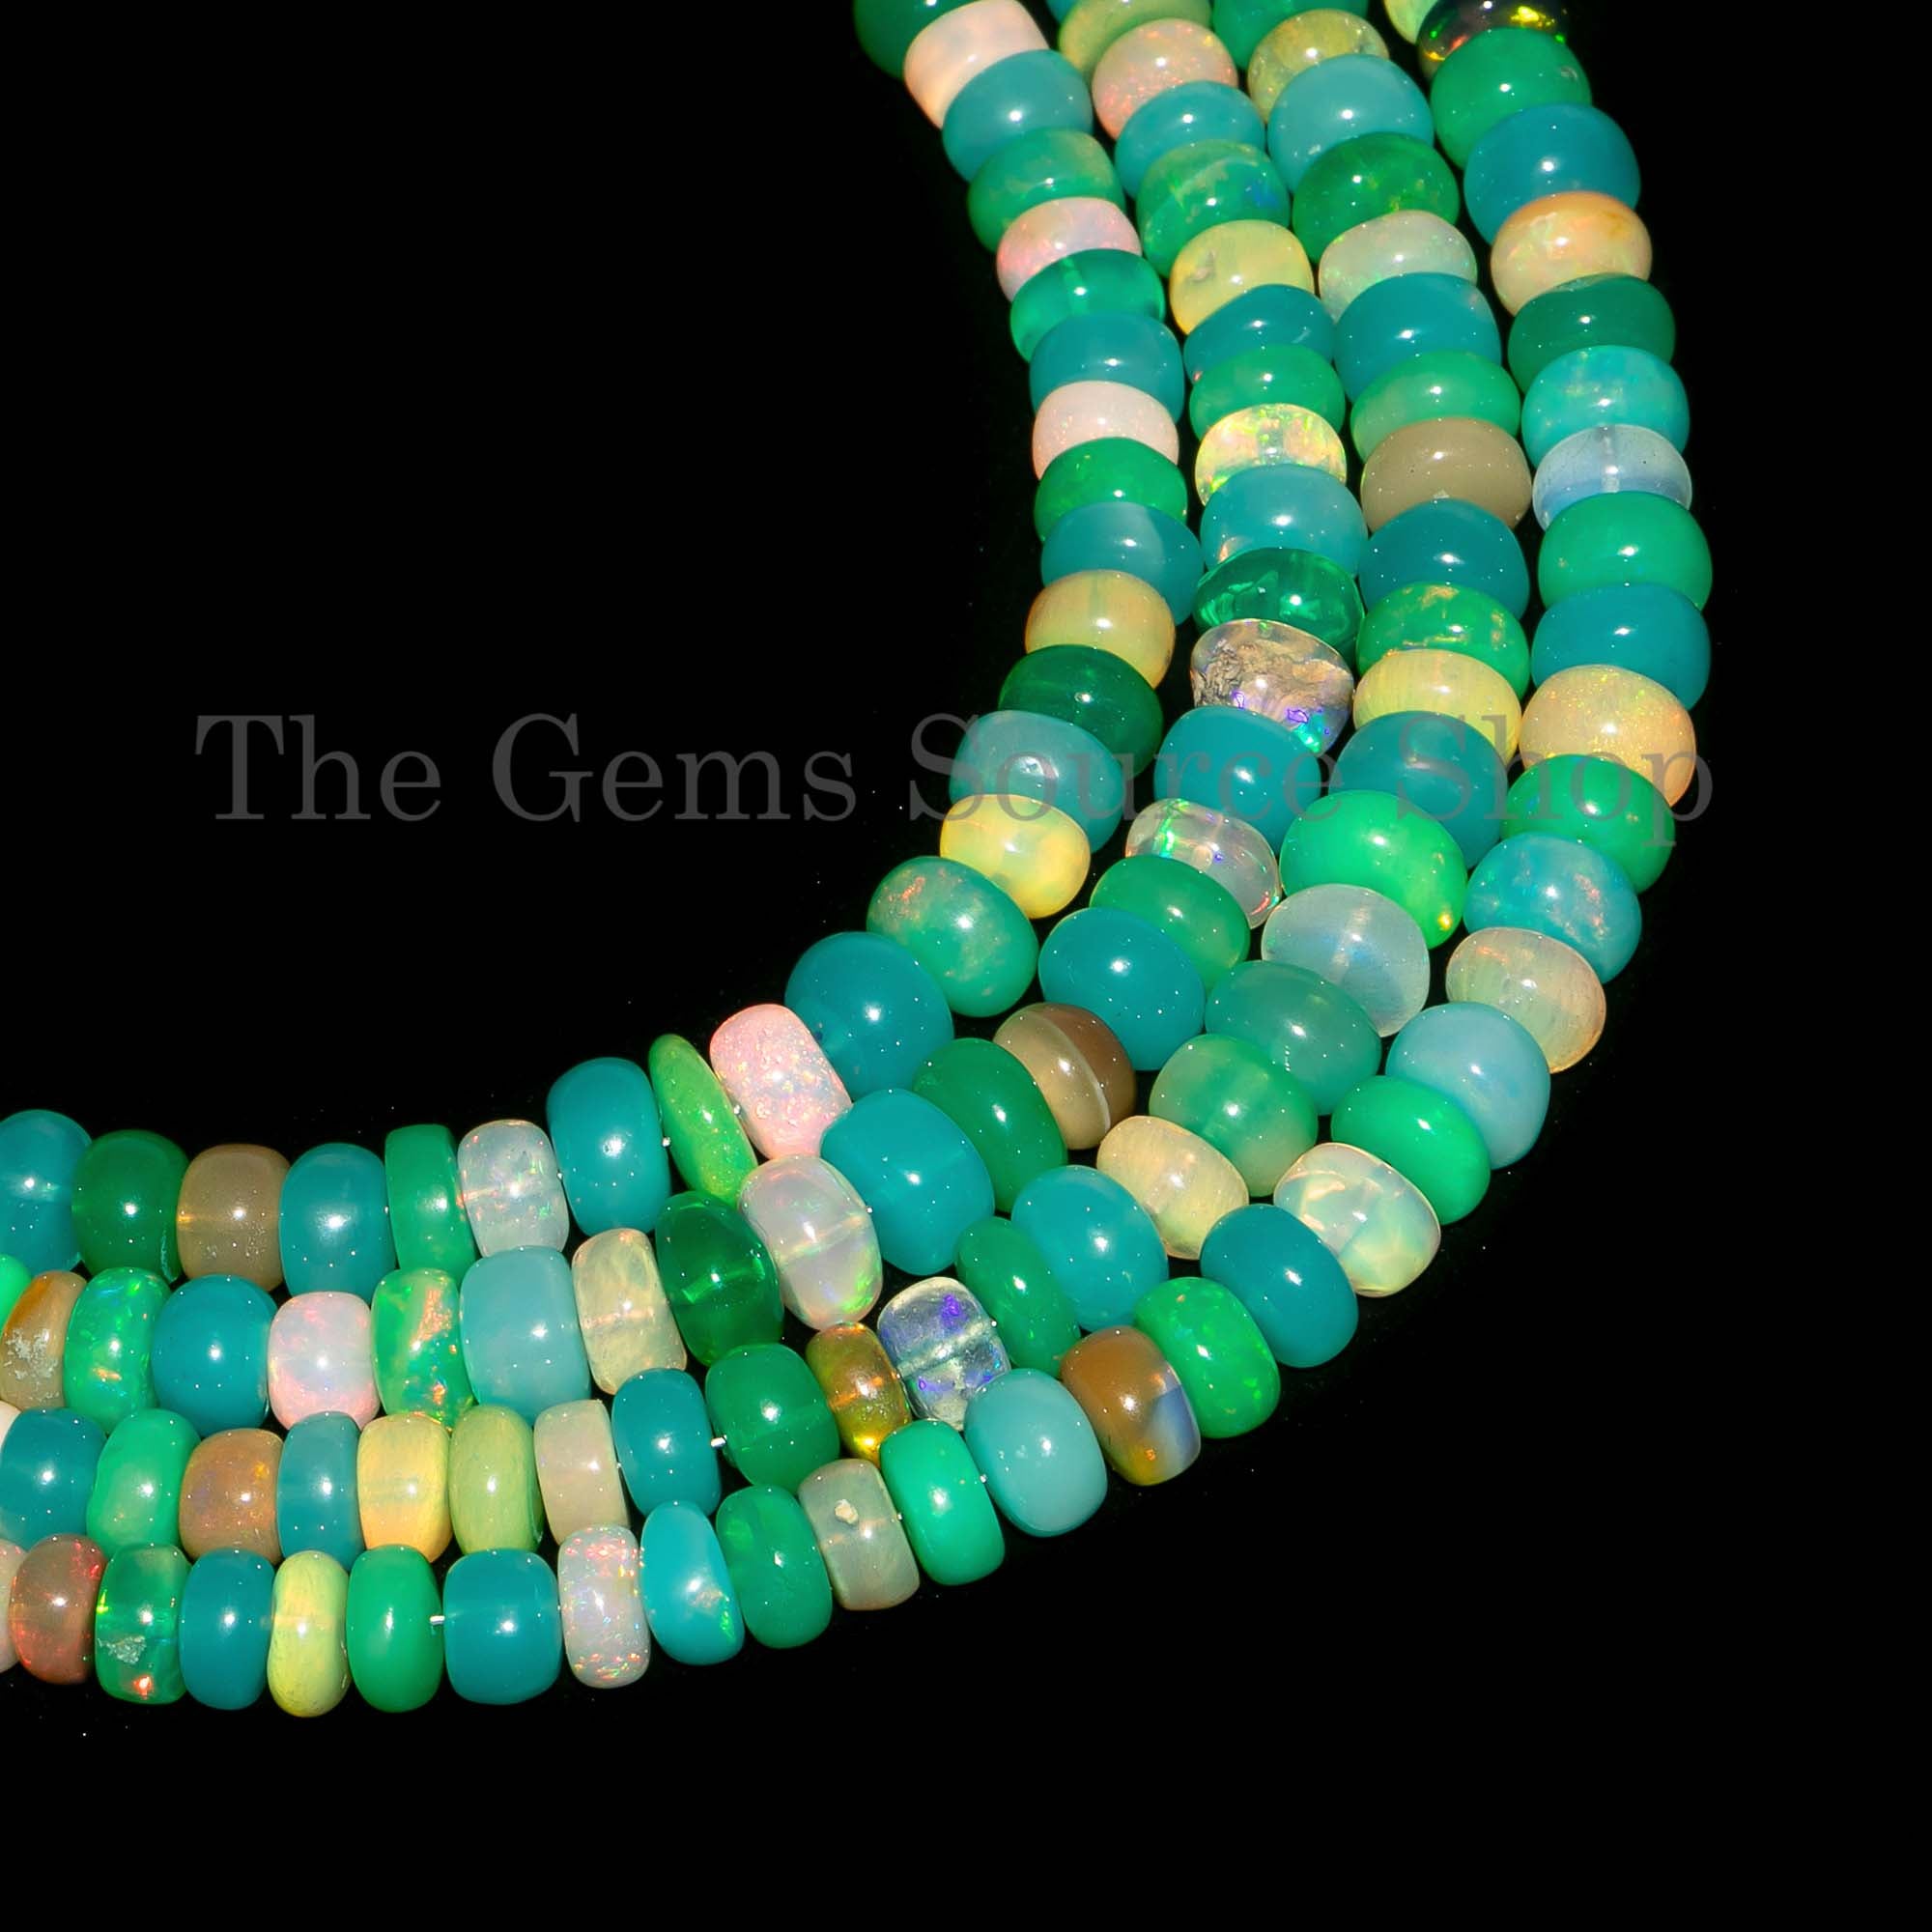 Paraiba Opal Beads, Paraiba Opal Smooth Beads, Paraiba Opal Rondelle Shape Beads, Wholesale Beads